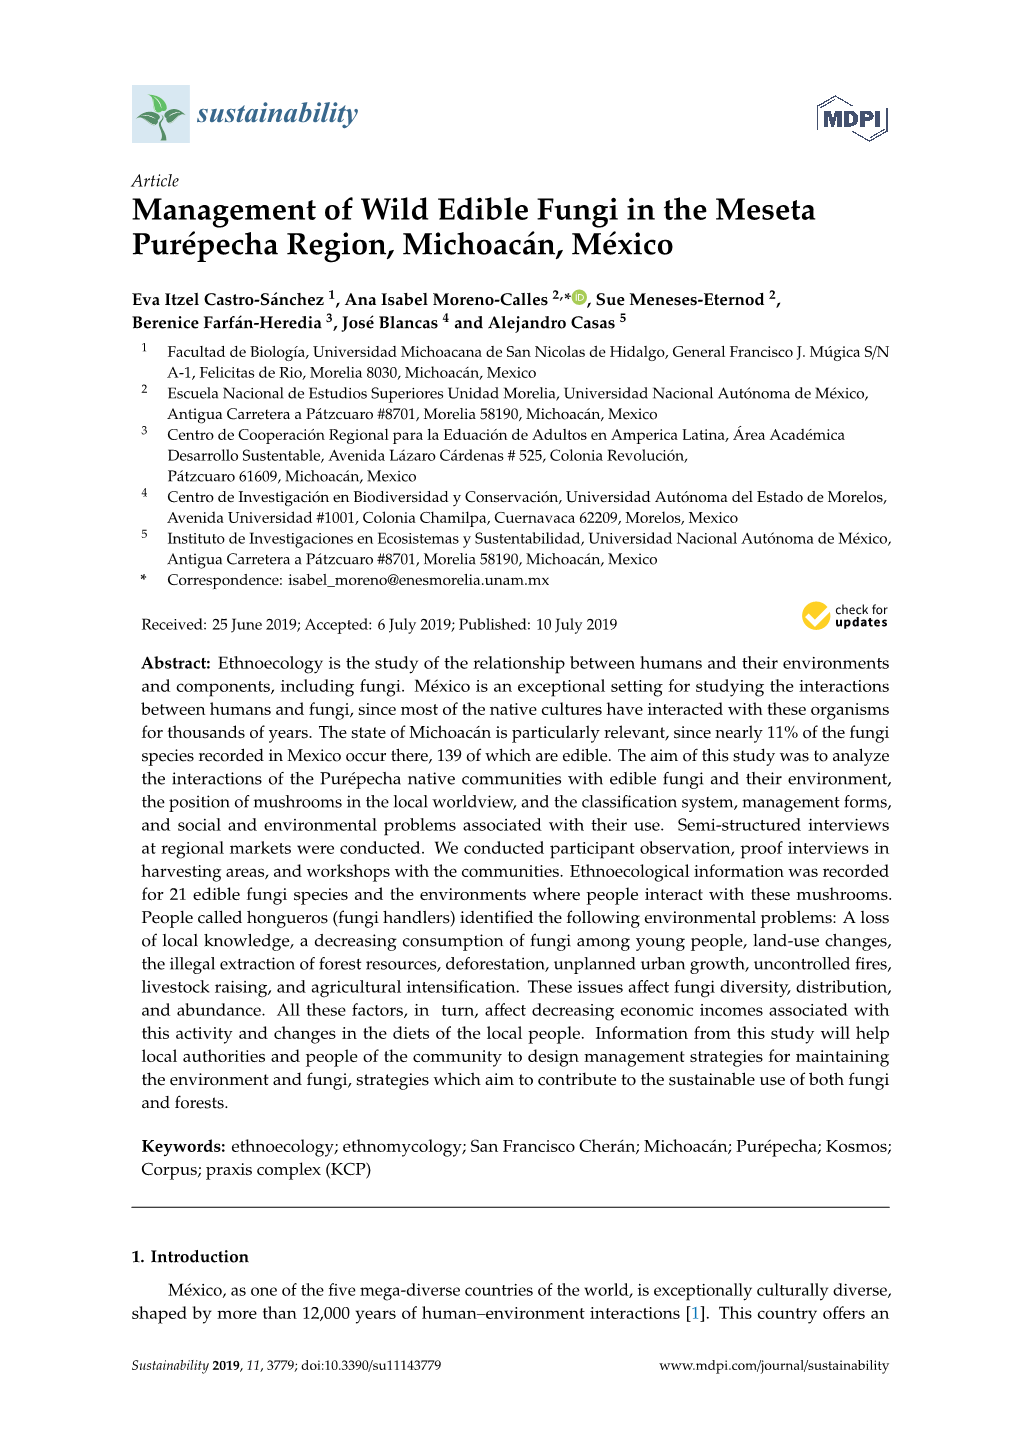 Management of Wild Edible Fungi in the Meseta Purépecha Region, Michoacán, México